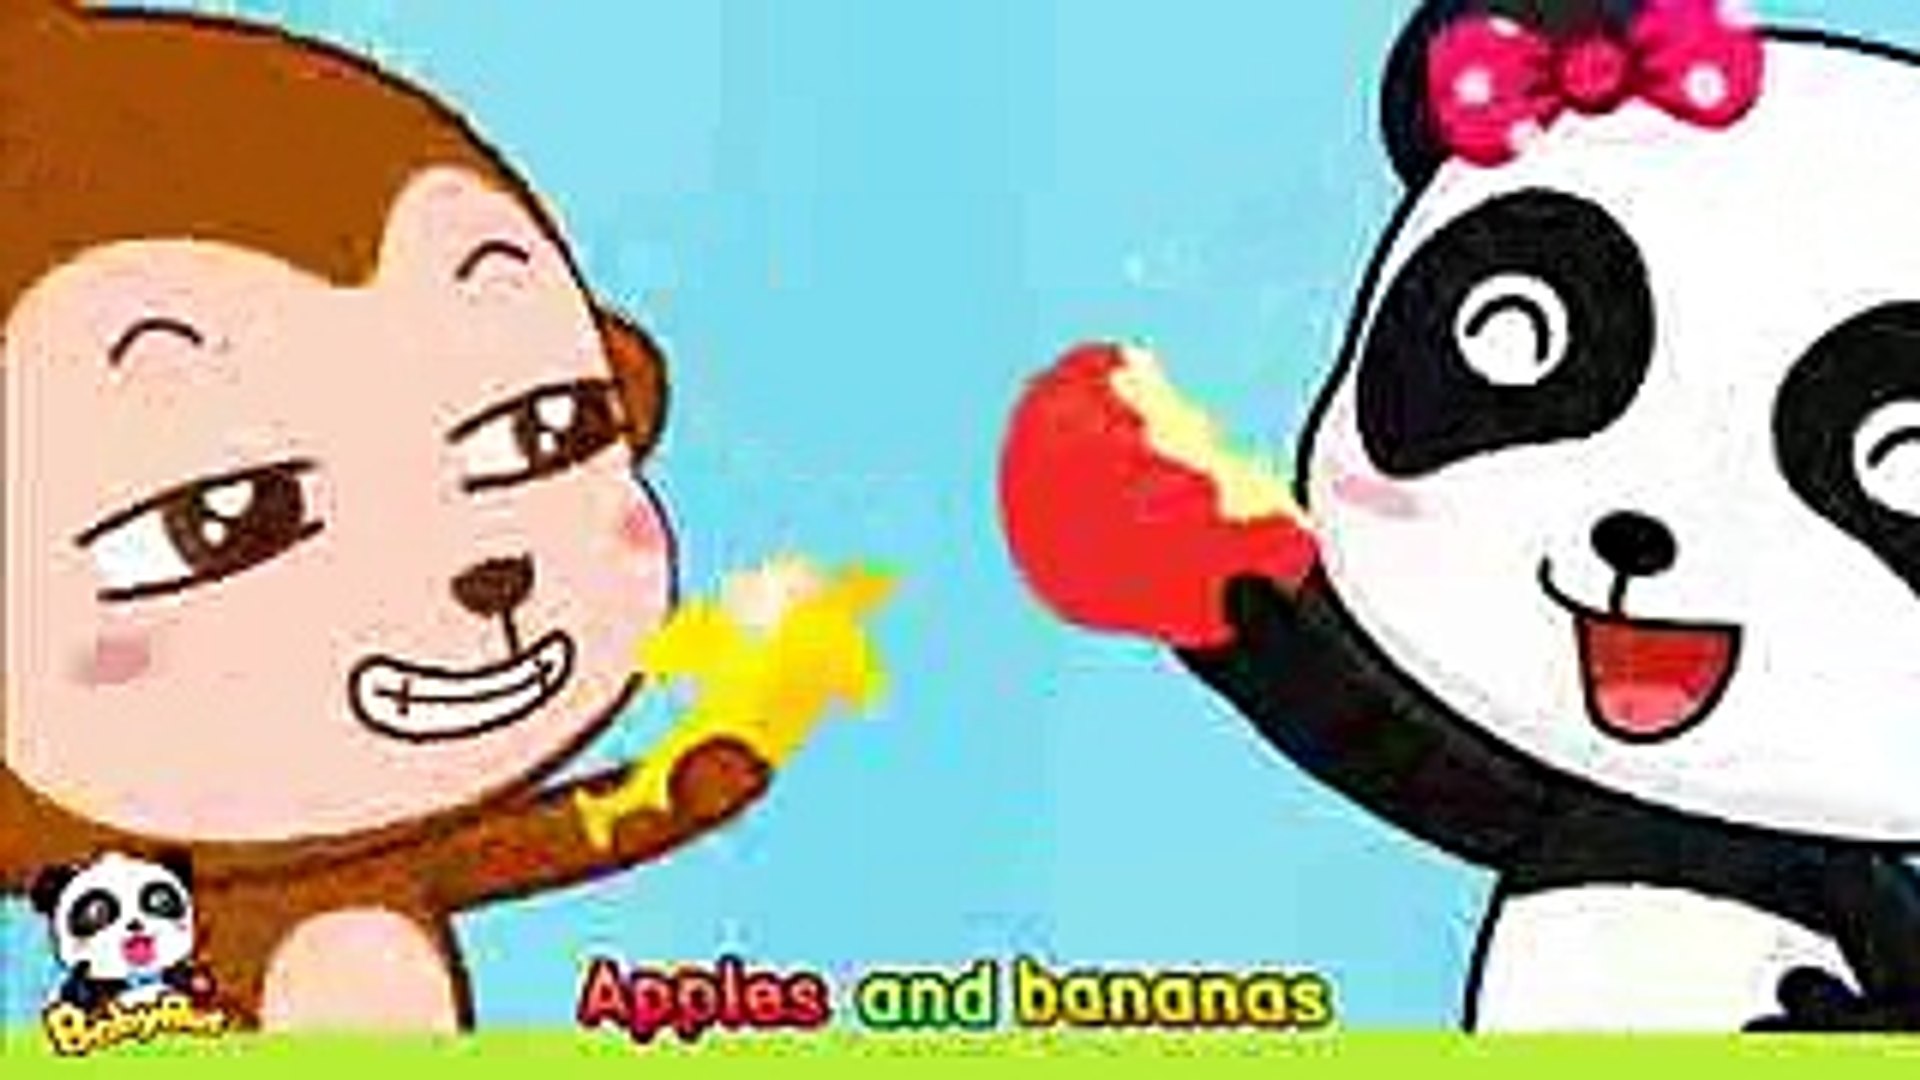 Apples And Bananas リンゴとバナナ くだもののうた 赤ちゃんが喜ぶ英語の歌 子供の歌 童謡 アニメ 動画 Babybus Video Dailymotion